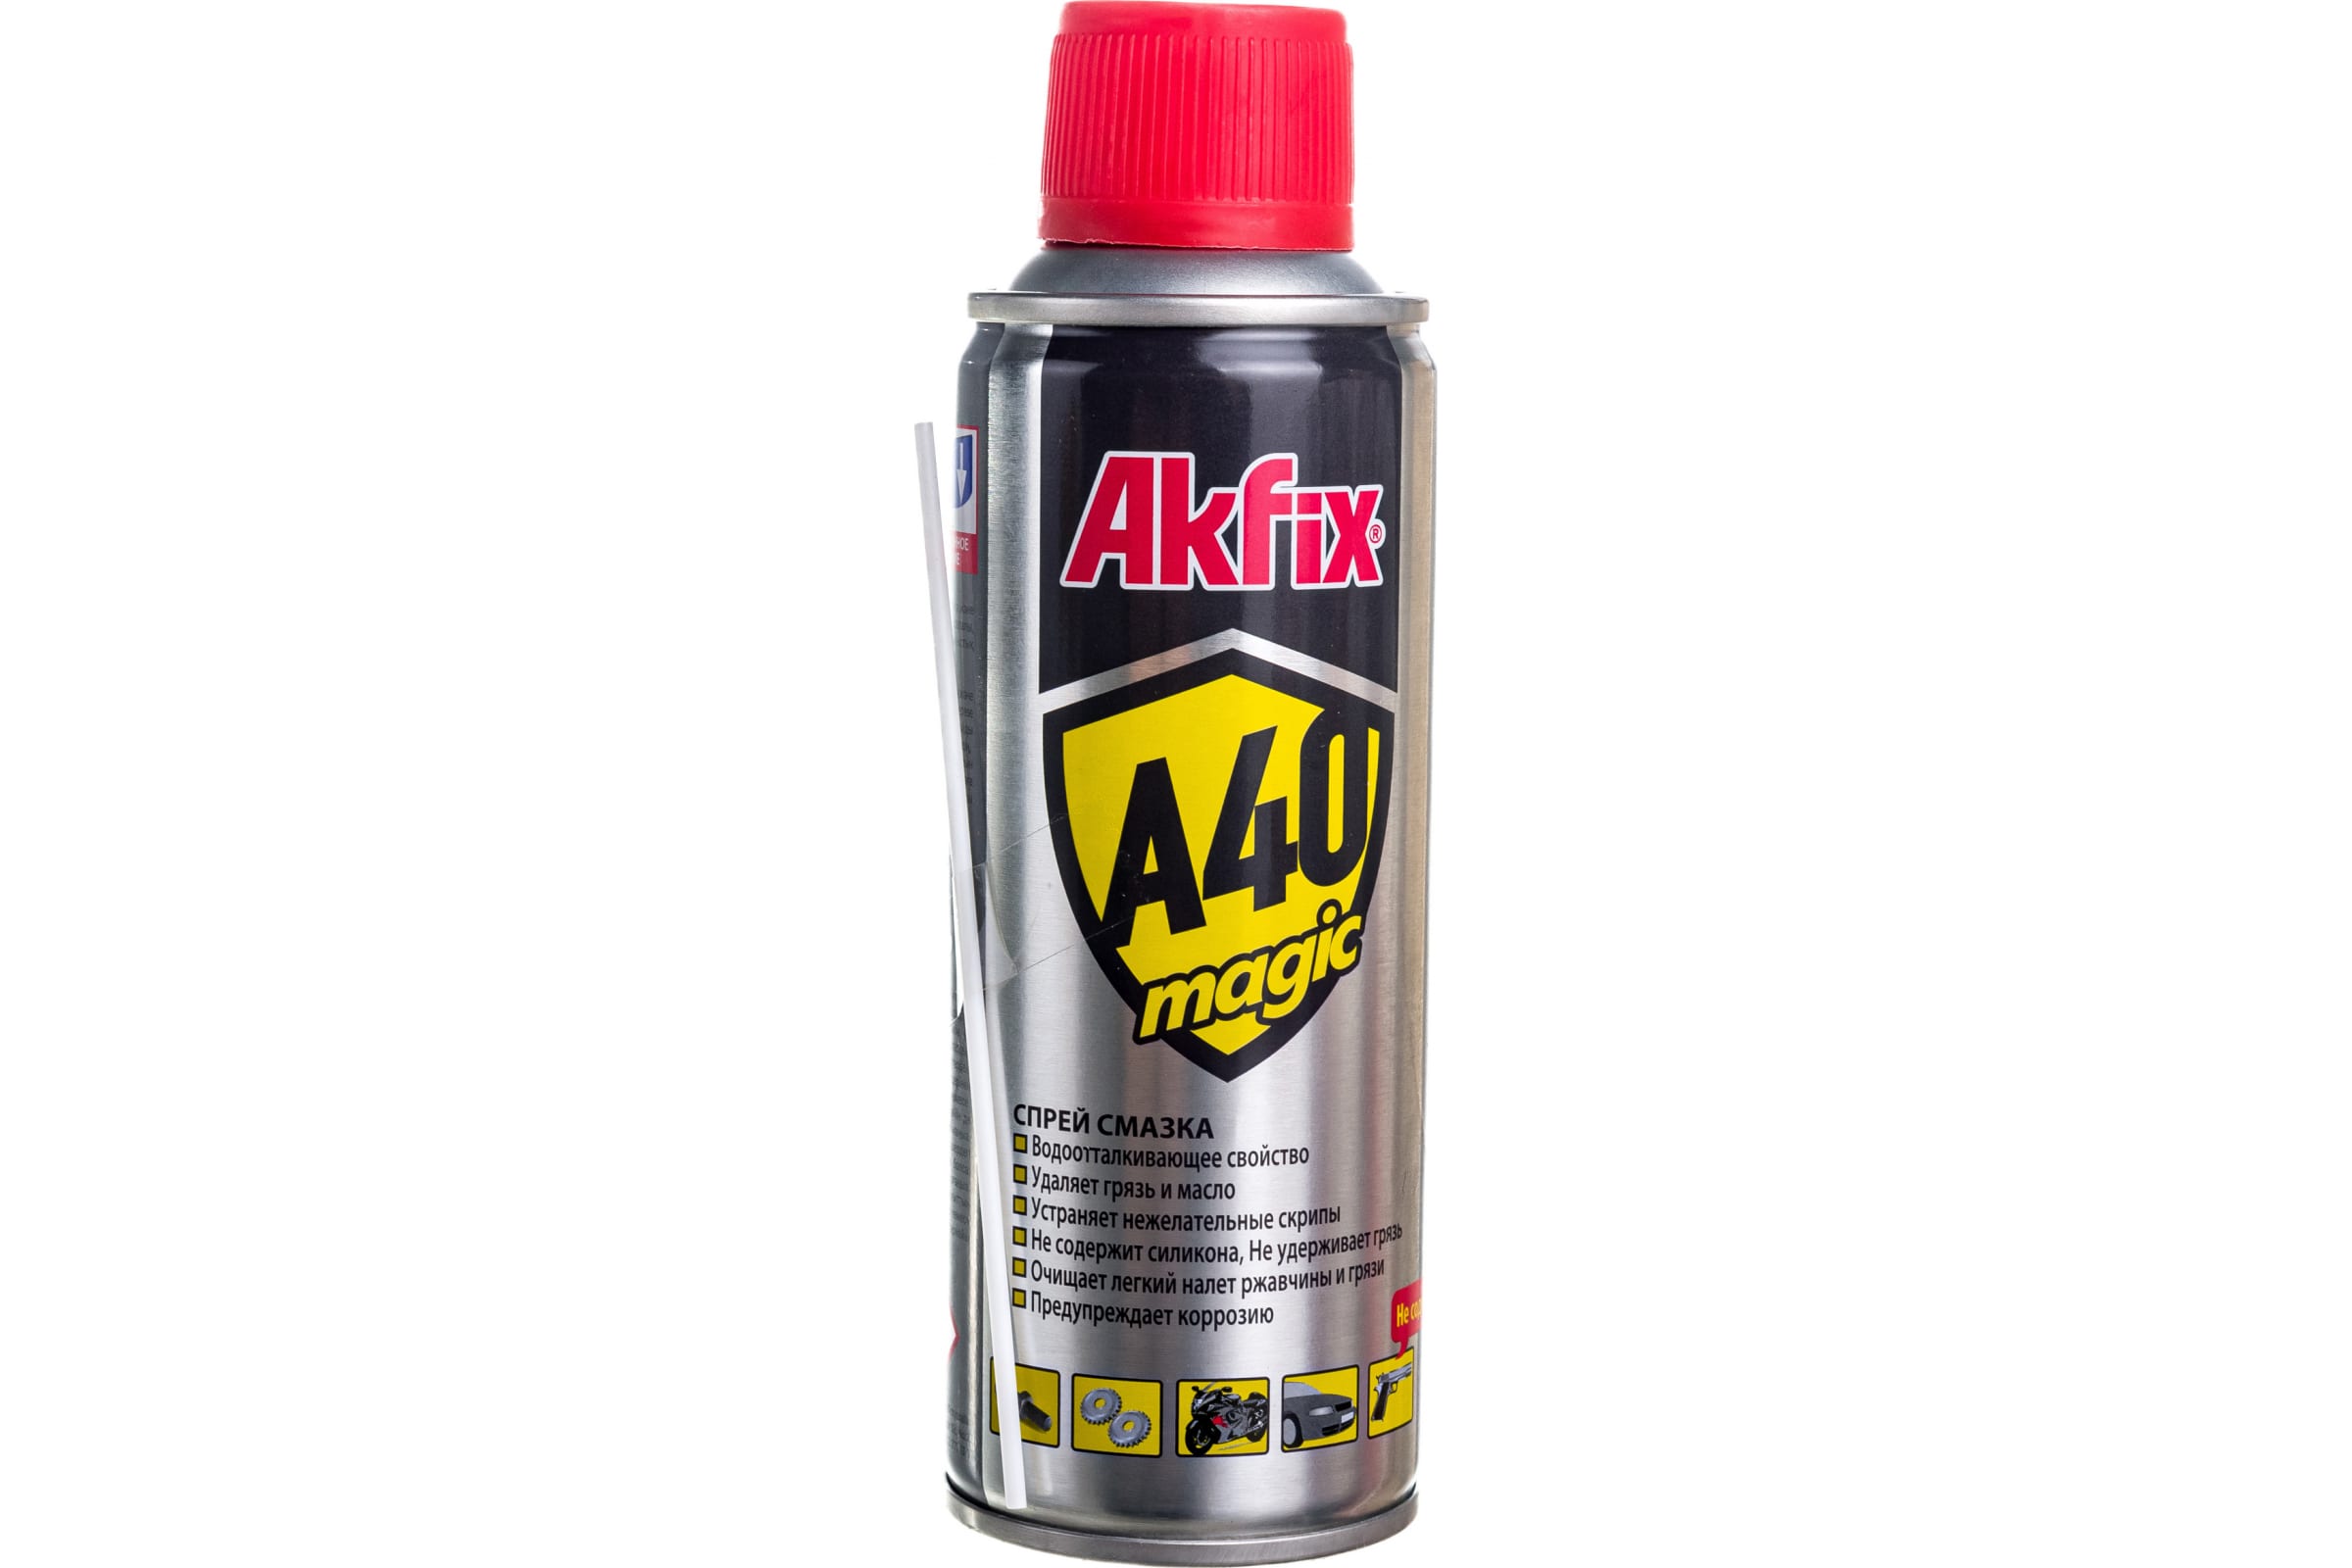 Akfix Универсальная смазка A40 Magic, 200 мл YA420 универсальная смазка vitex